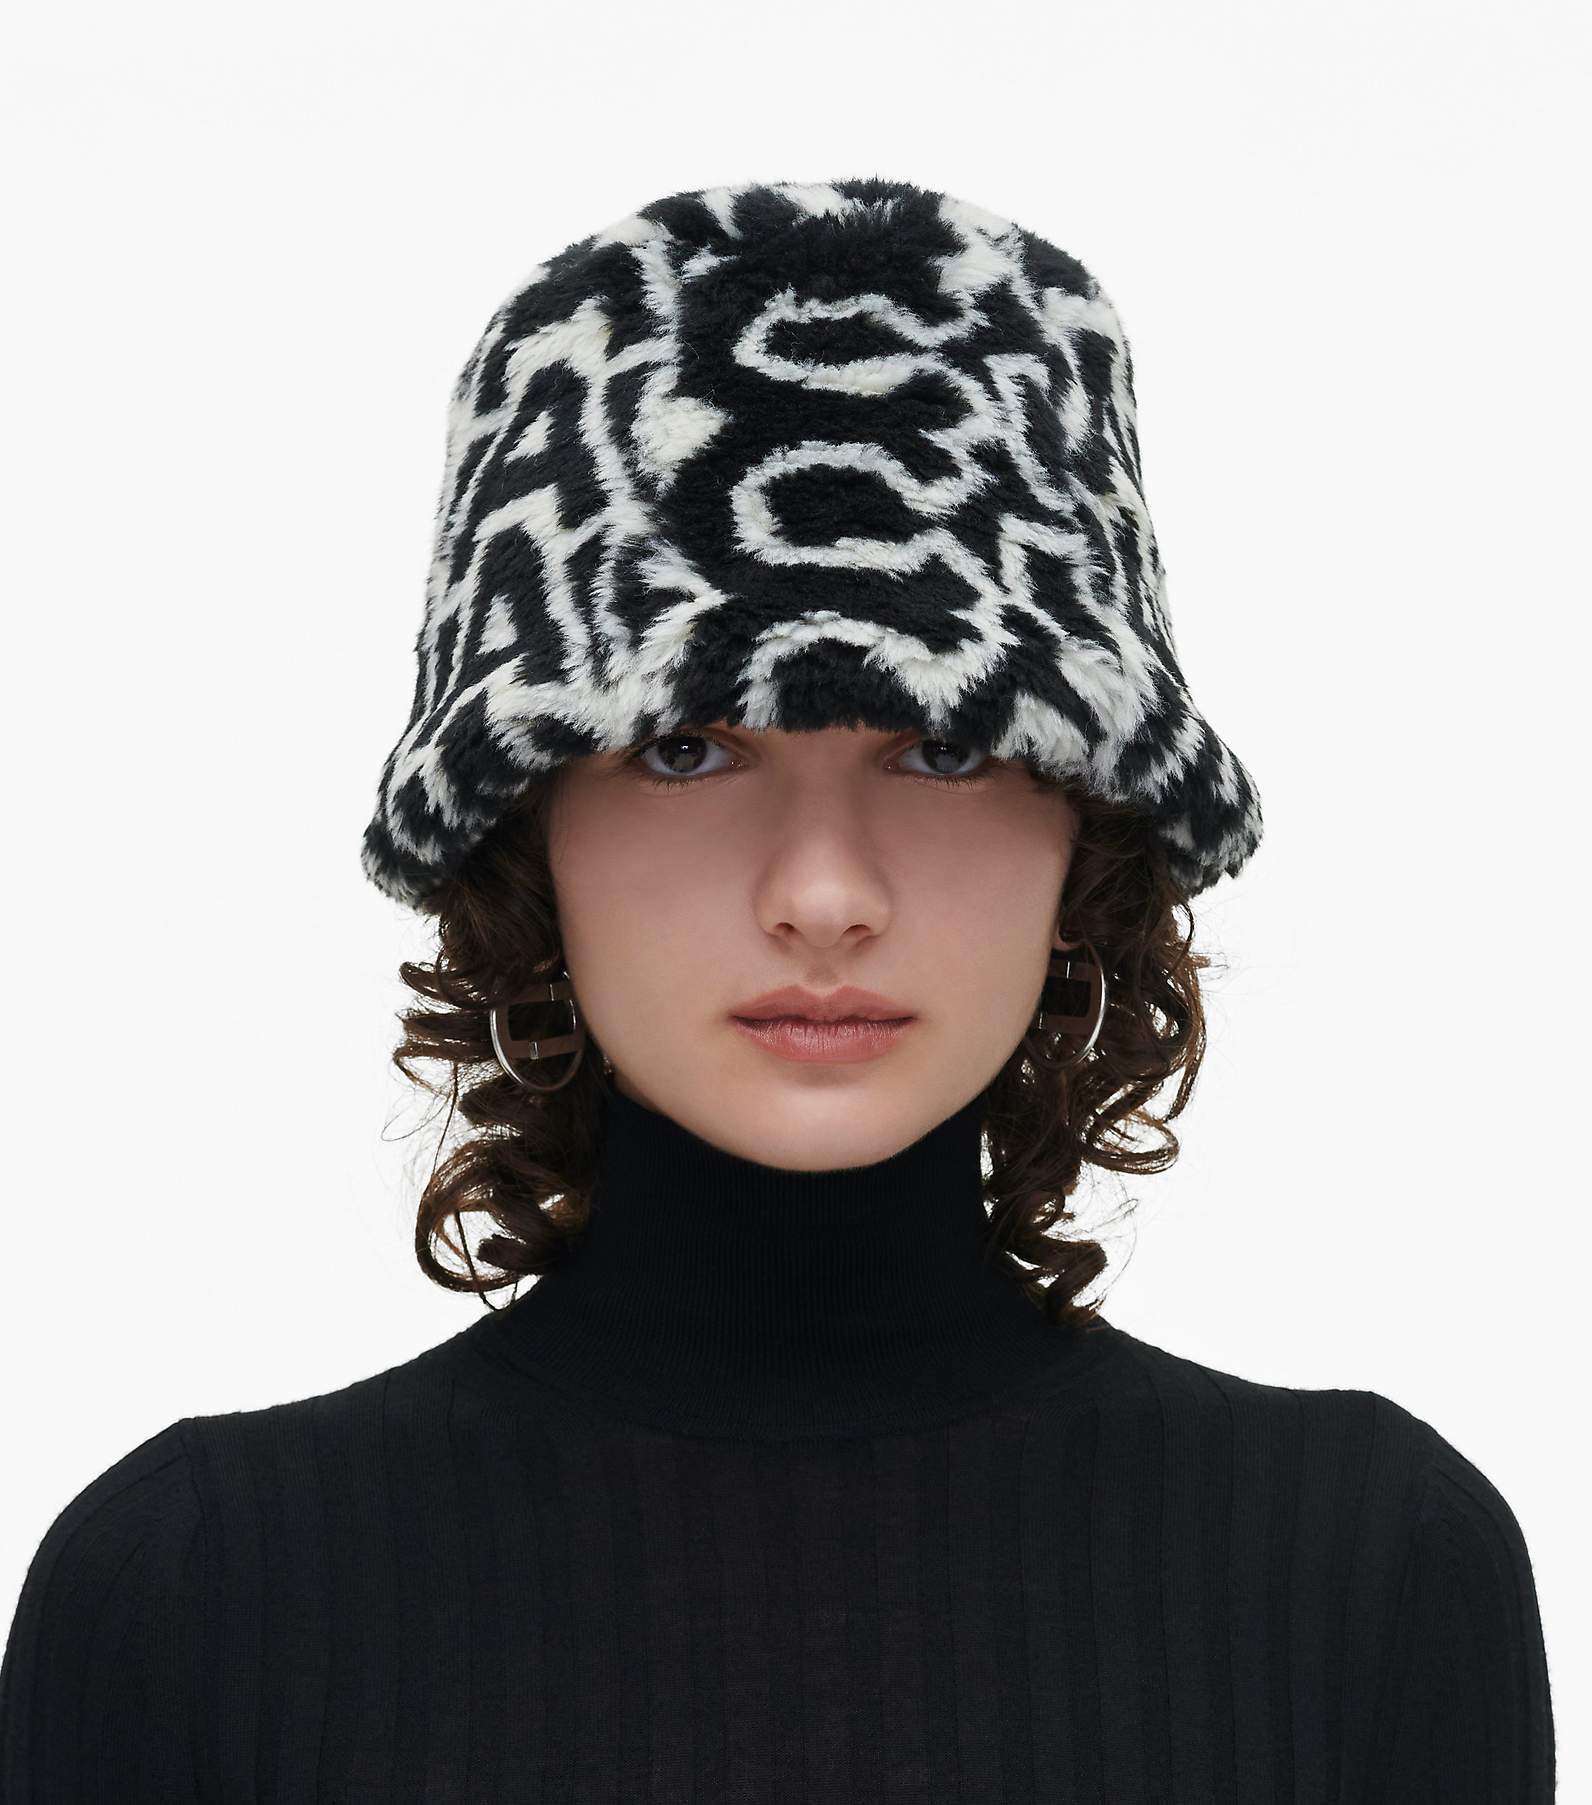 Marc Jacobs Monogram Denim Bucket Hat - Farfetch